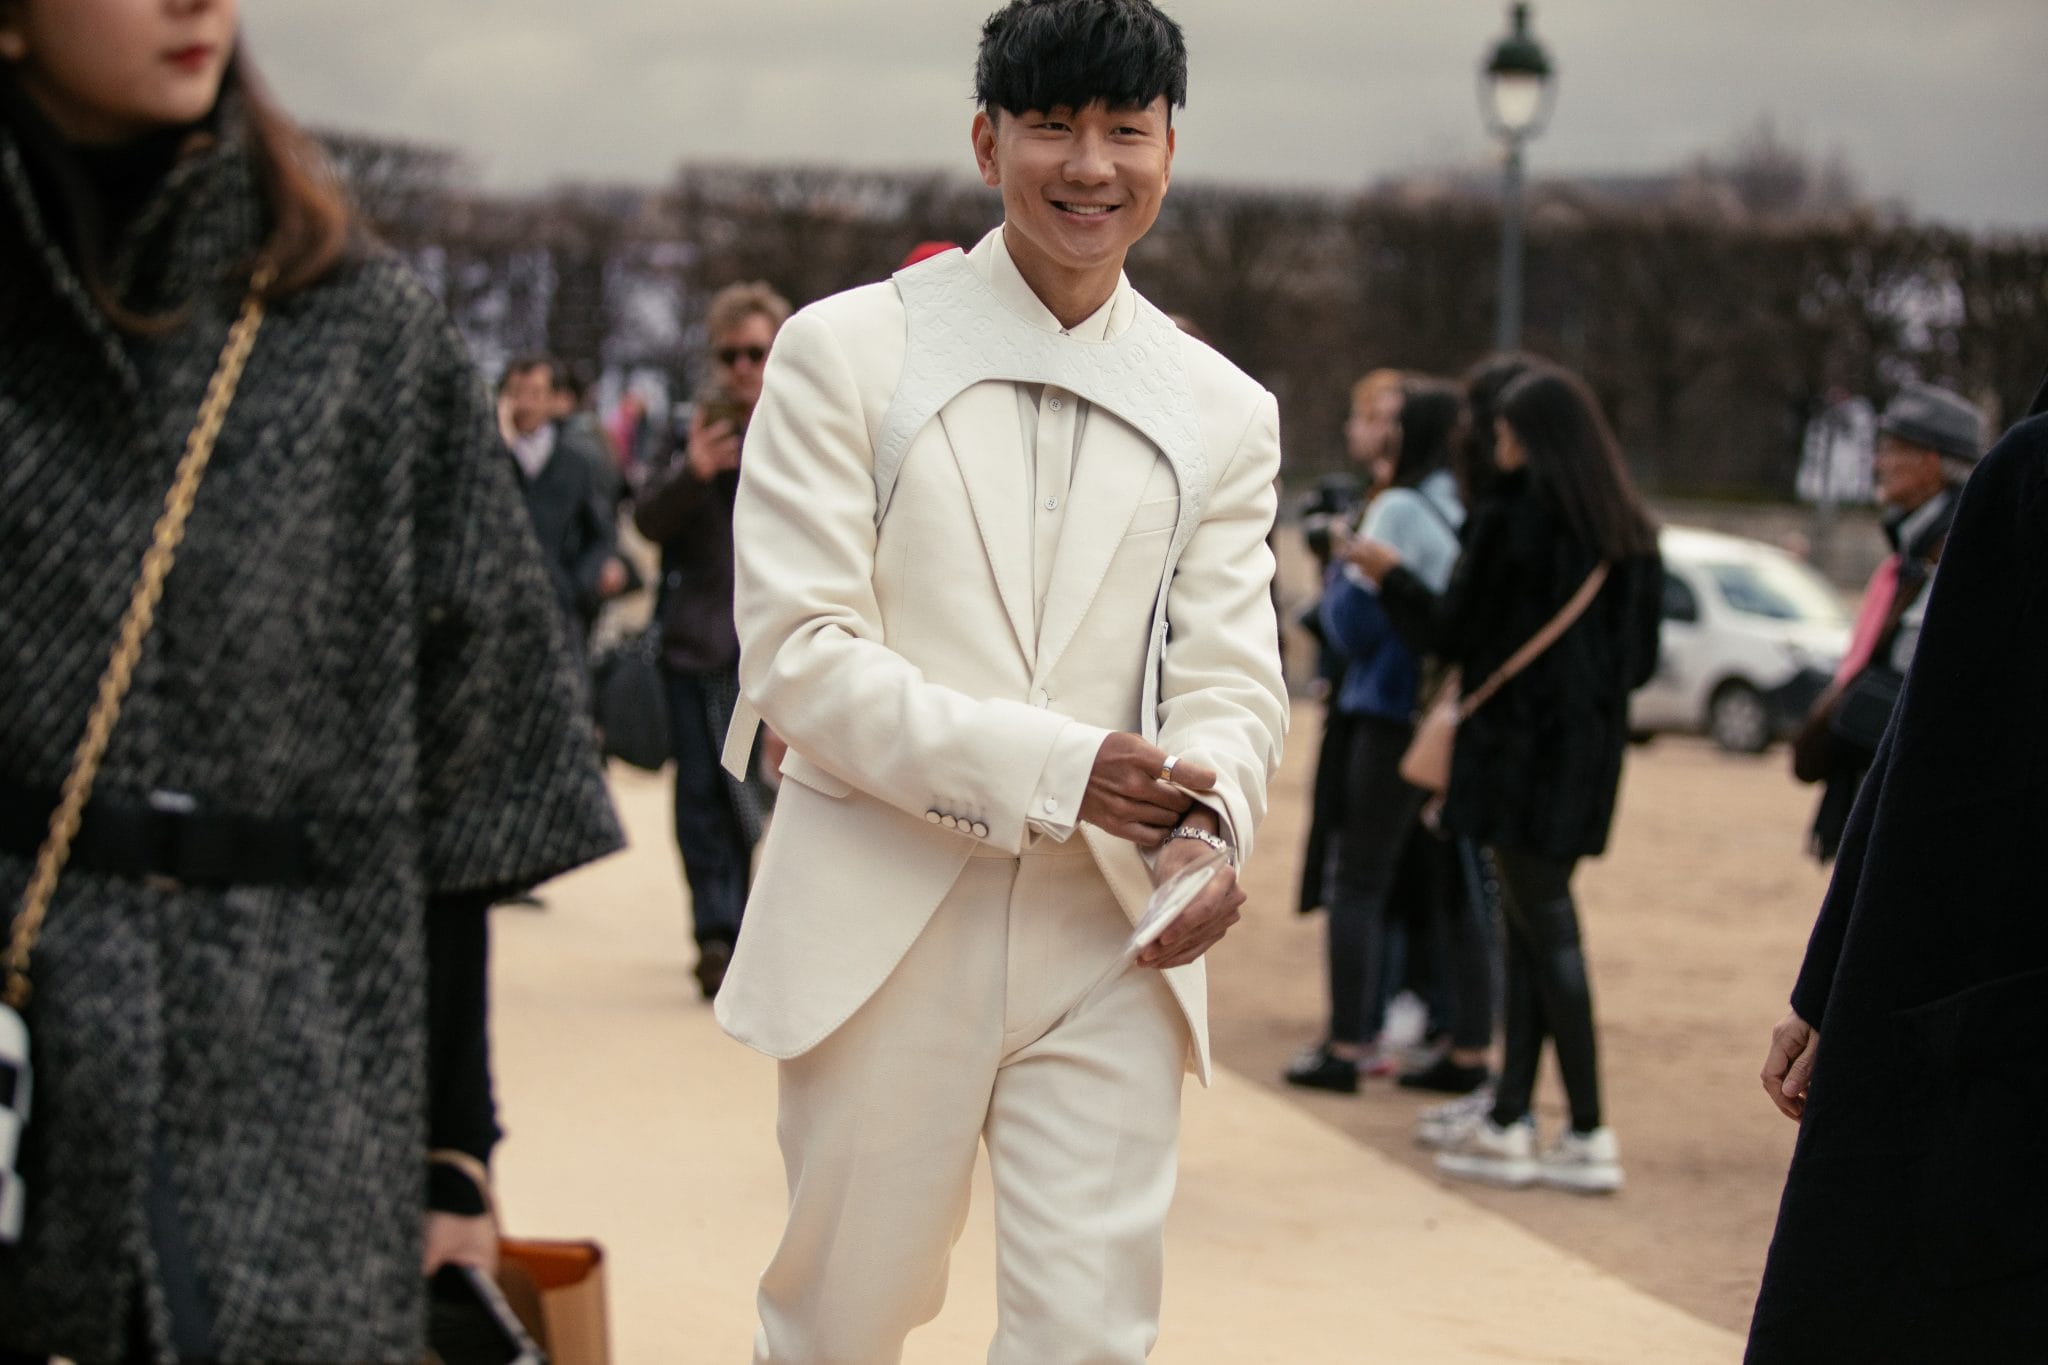 Paris Fashion Week Men's FW 2019 - Street Style at Louis Vuitton show 